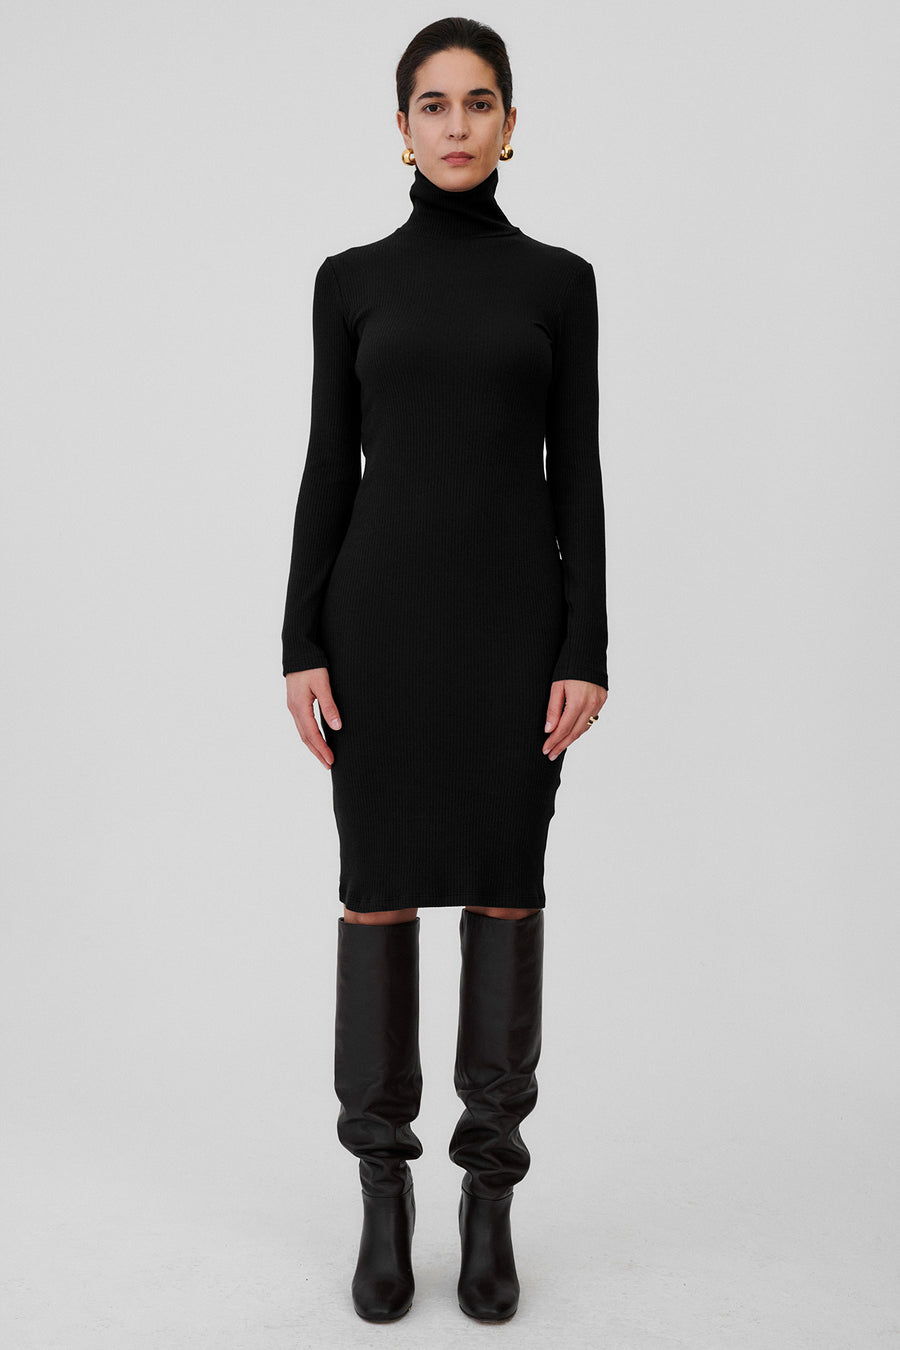 Dress in organic cotton / 02 / 01 / onyx black PRE-ORDER